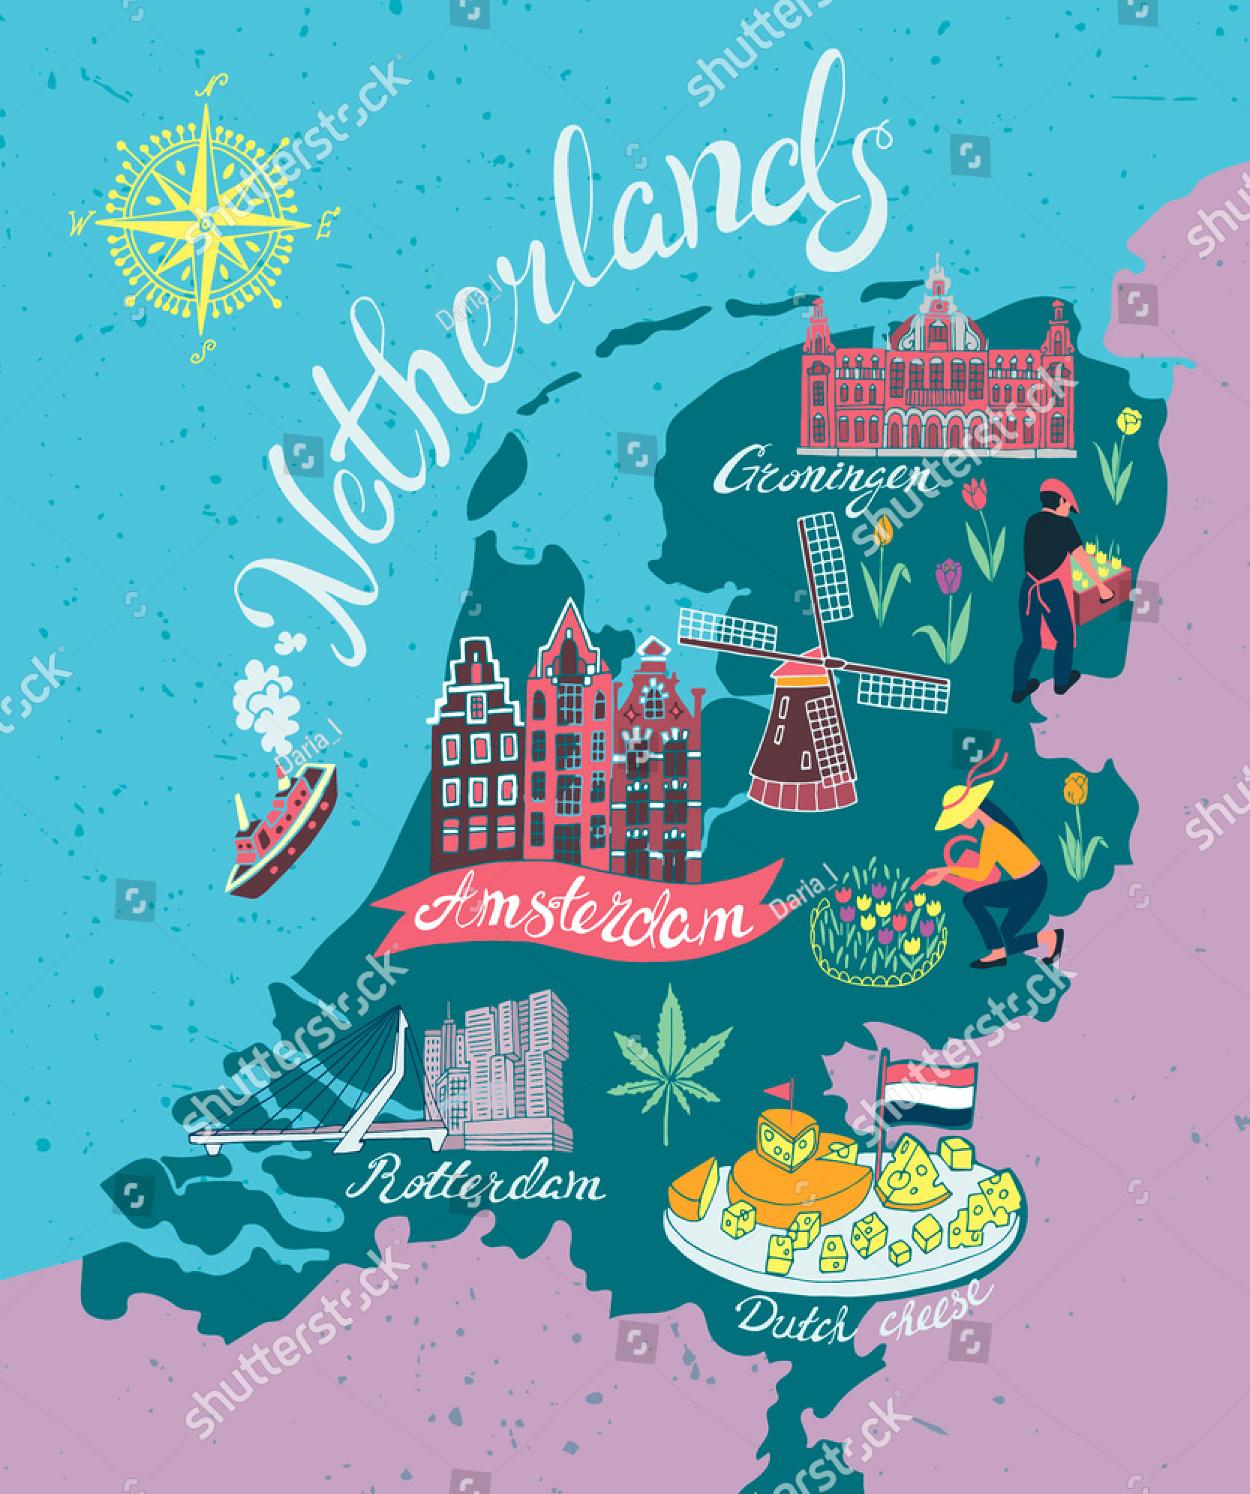 netherlands tourist board uk